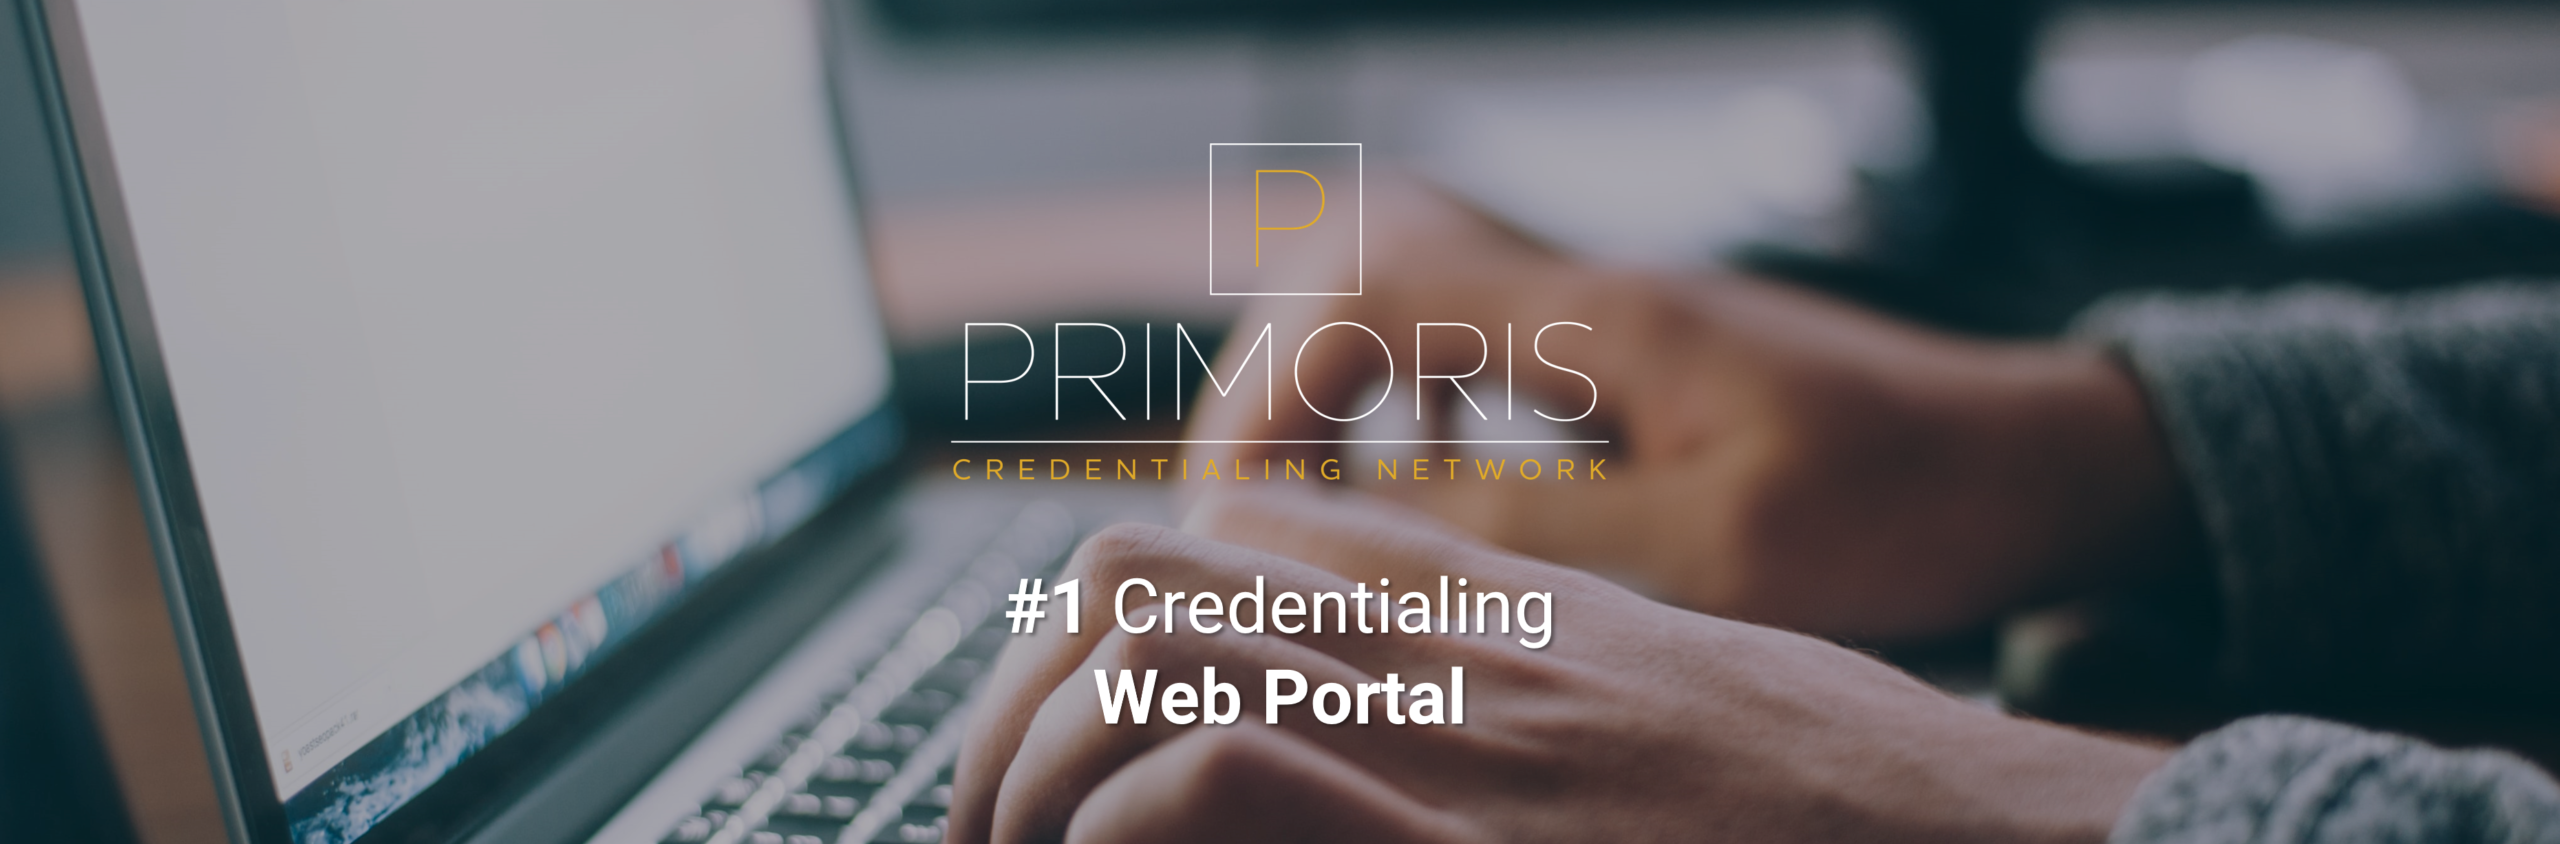 #1 Credentialing Web Portal